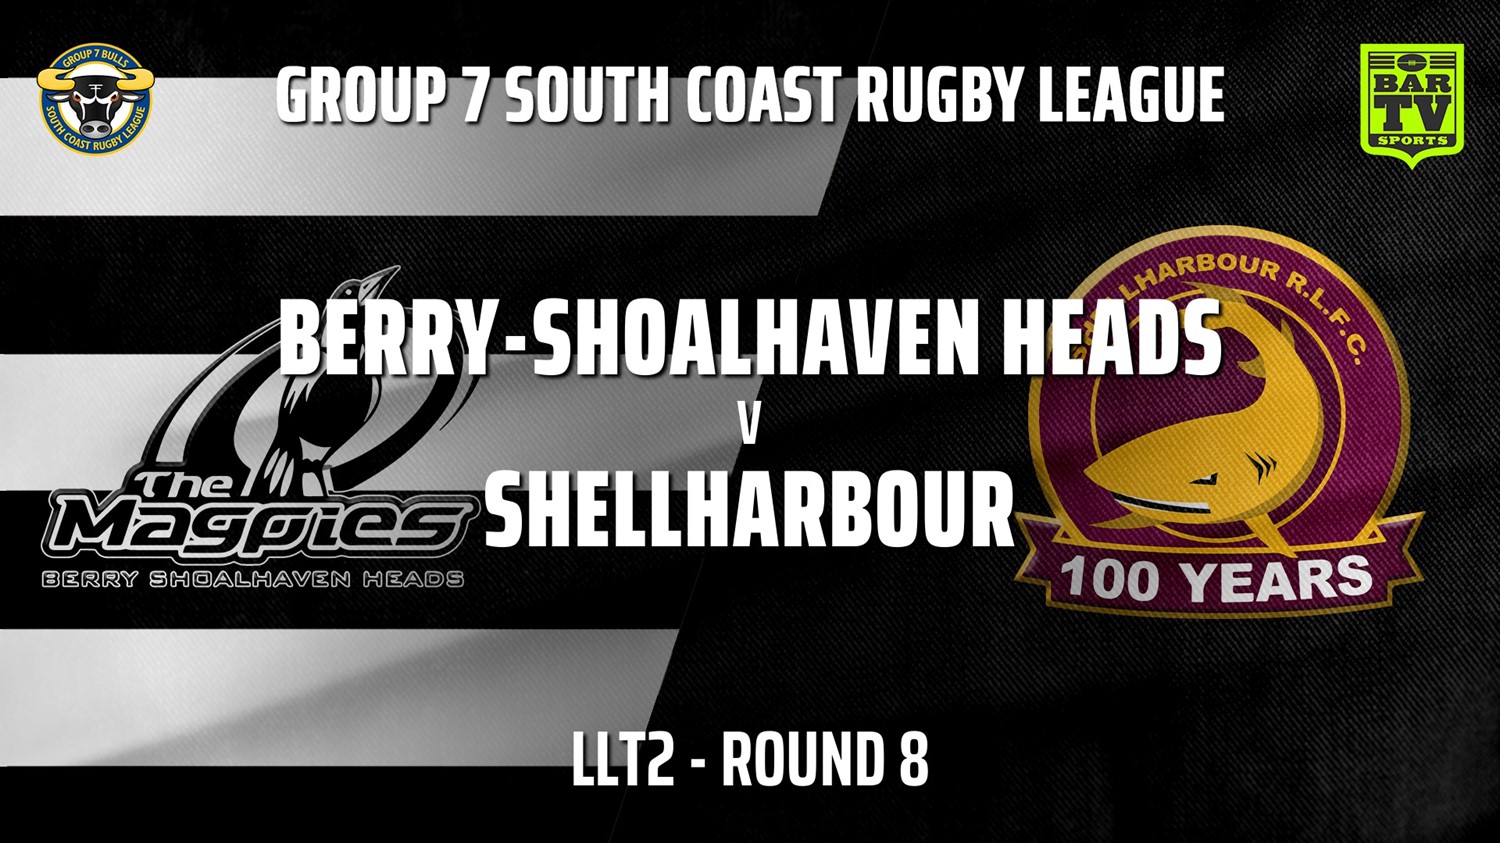 210605-Group 7 RL Round 8 - LLT2 - Berry-Shoalhaven Heads v Shellharbour Sharks Slate Image